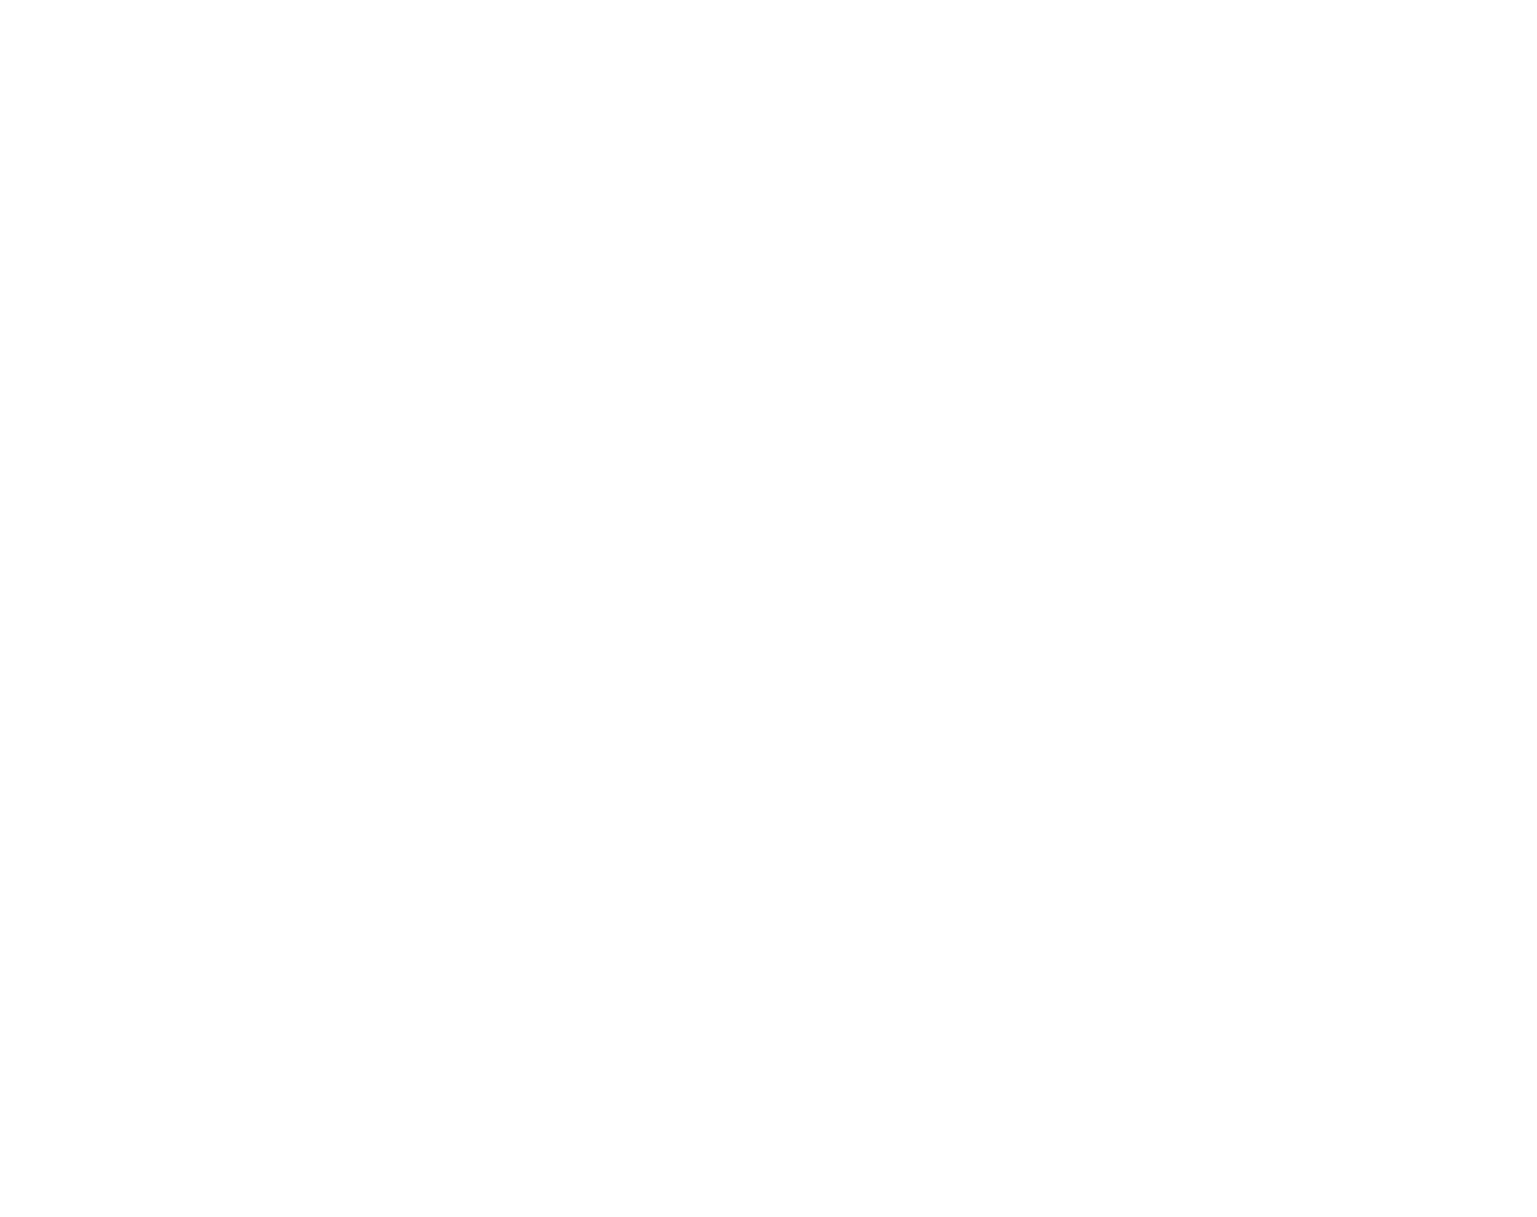 KRUK Spólka Akcyjna logo large for dark backgrounds (transparent PNG)